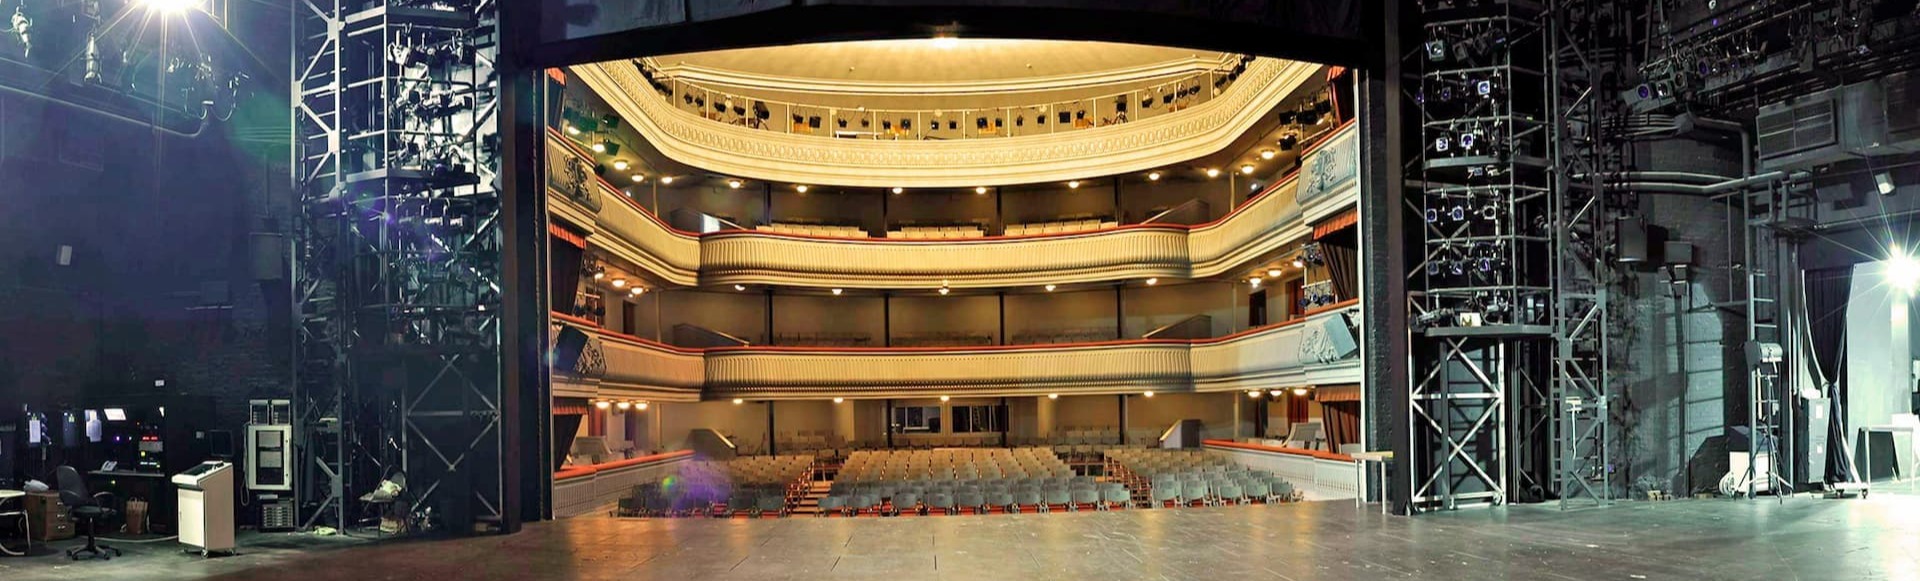 театр наций ложа балкона